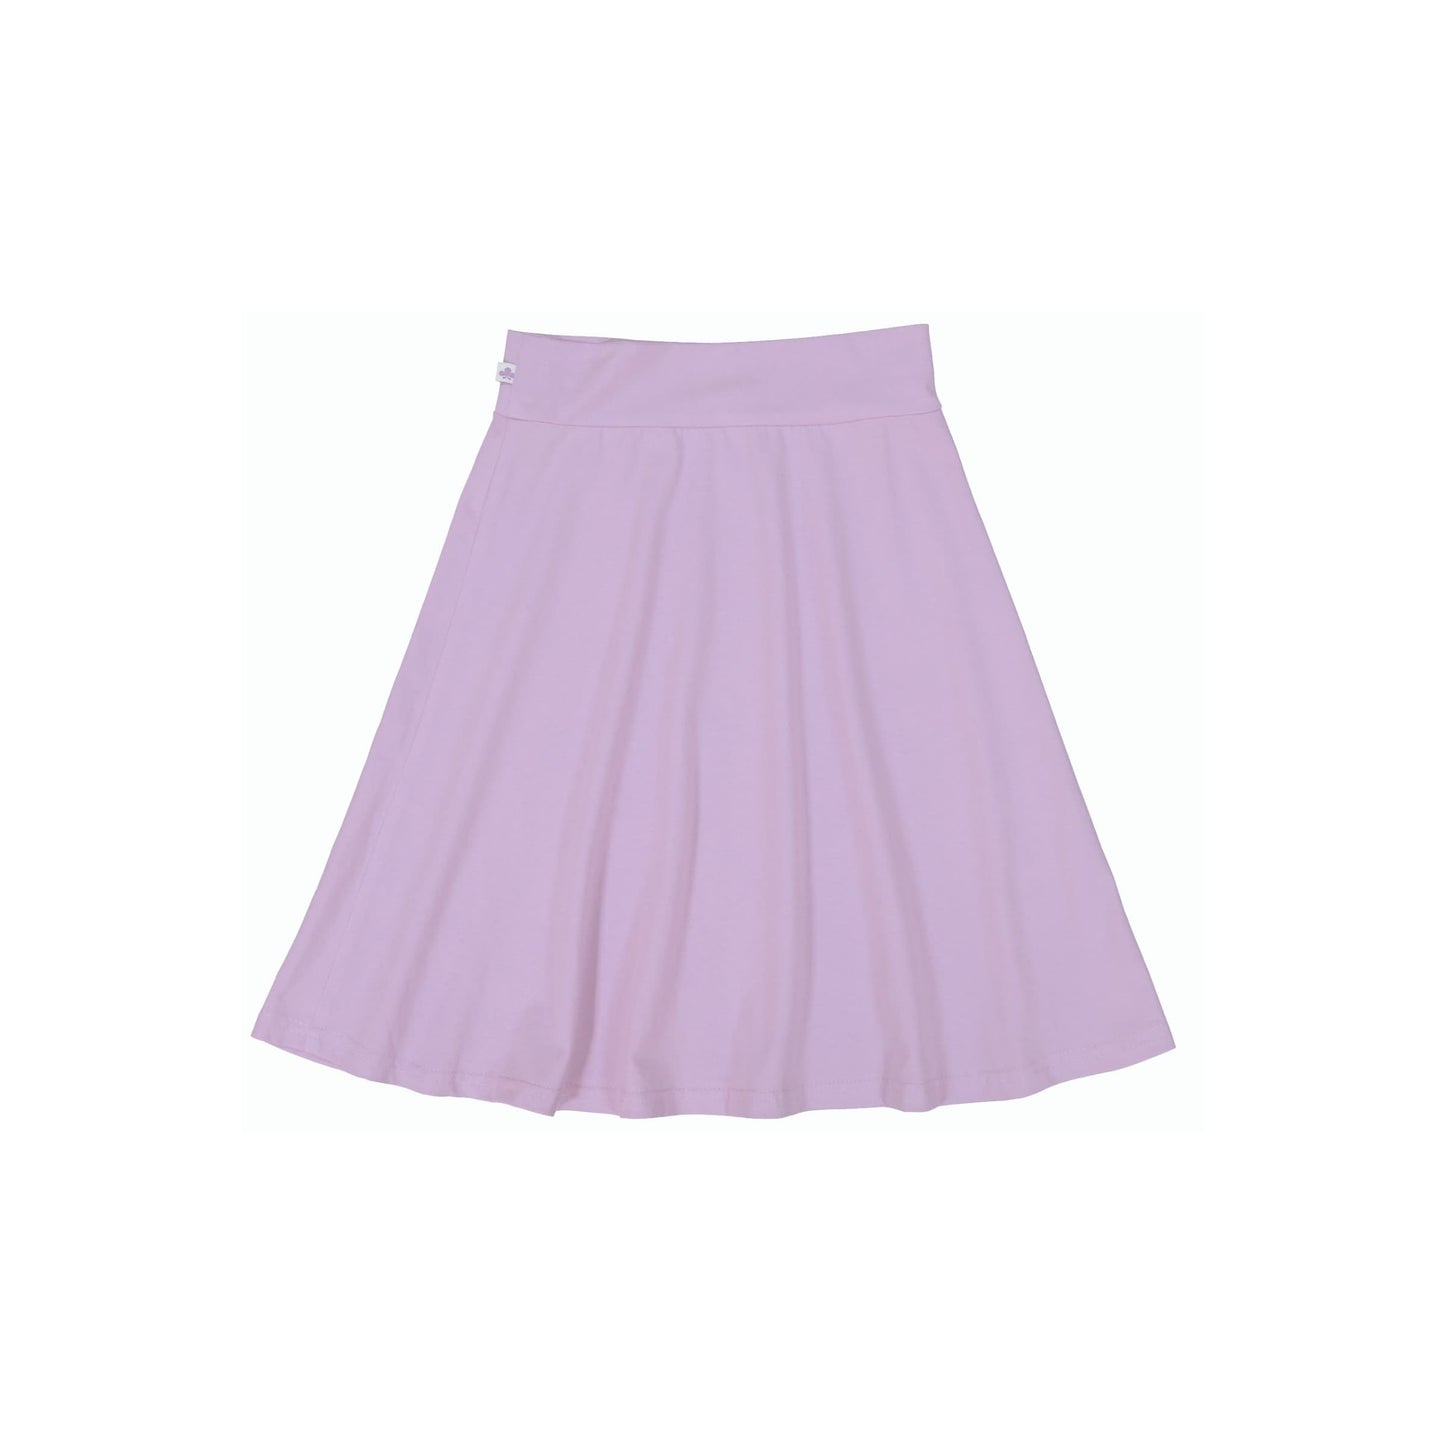 Camp Skirt Classic- Lavender